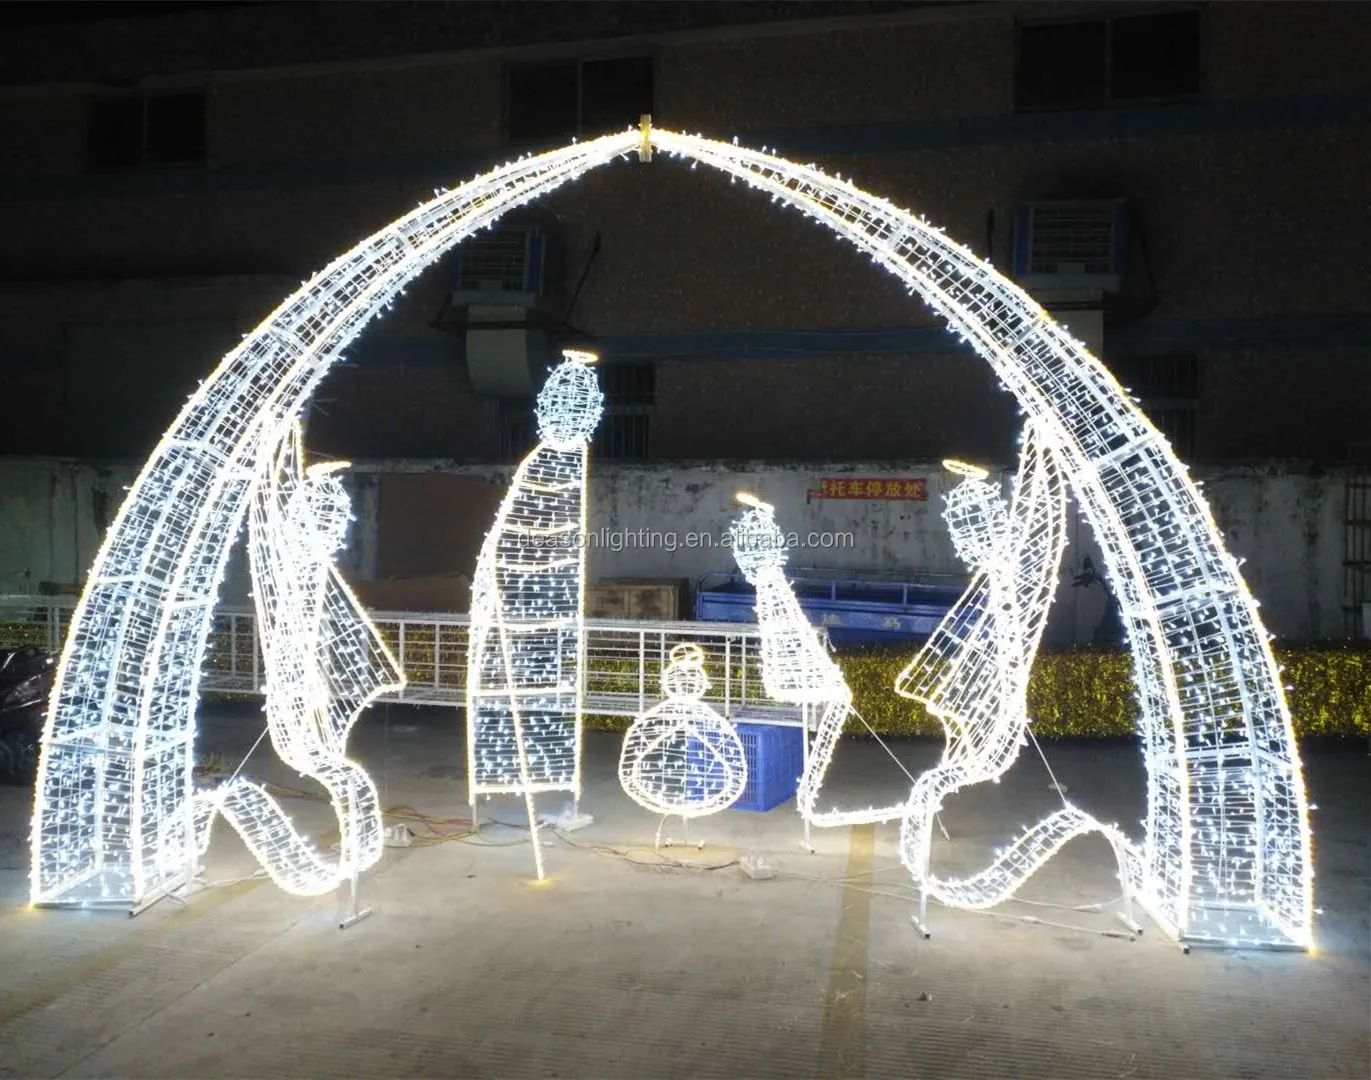 Lighted Outdoor Large Christmas Nativity Scene - Buy Lighted Nativity